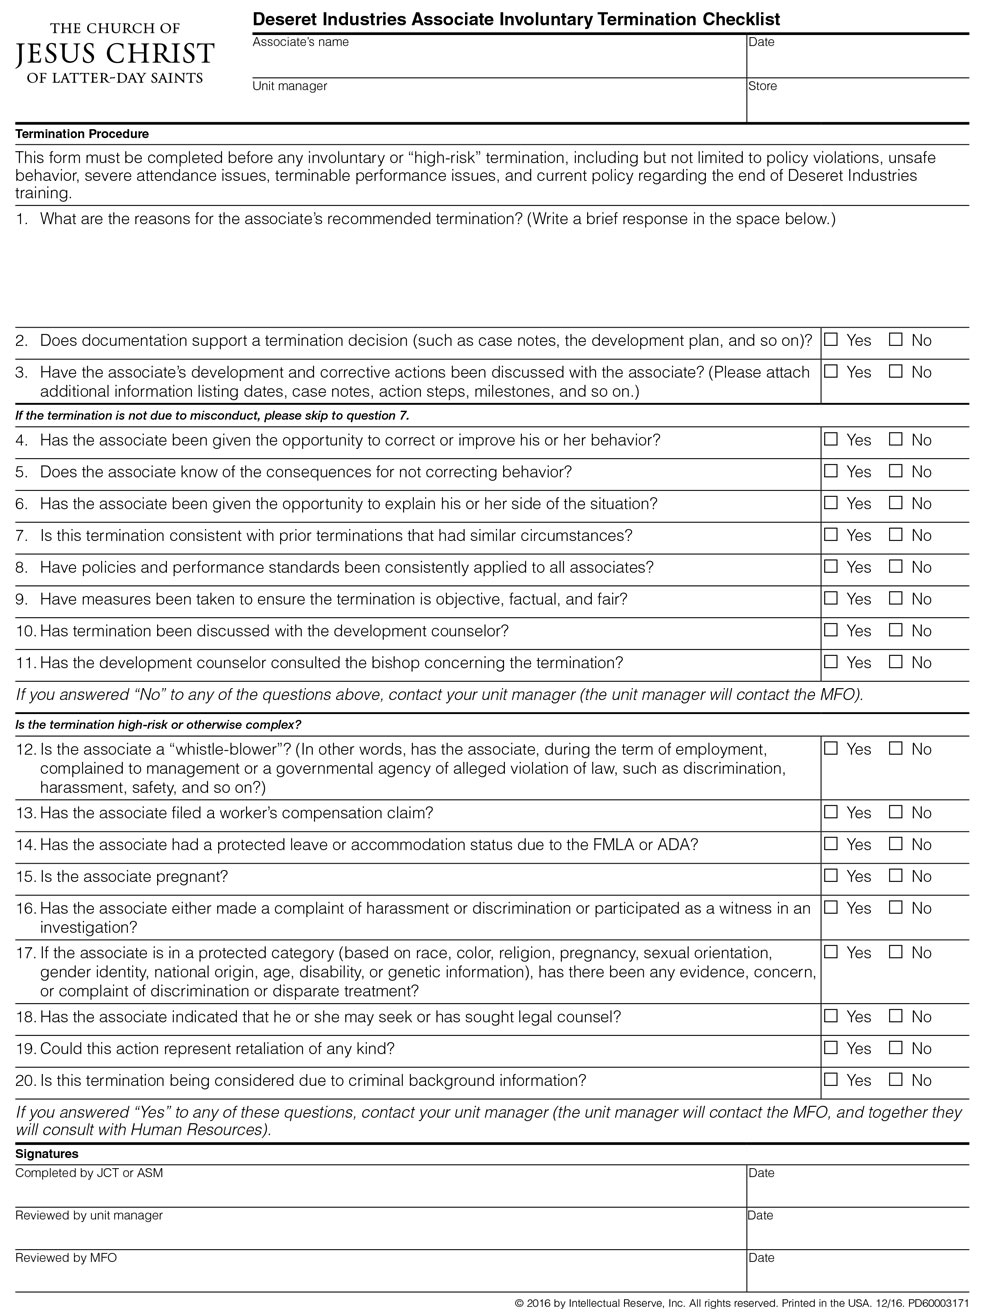 Associate involuntary termination checklist